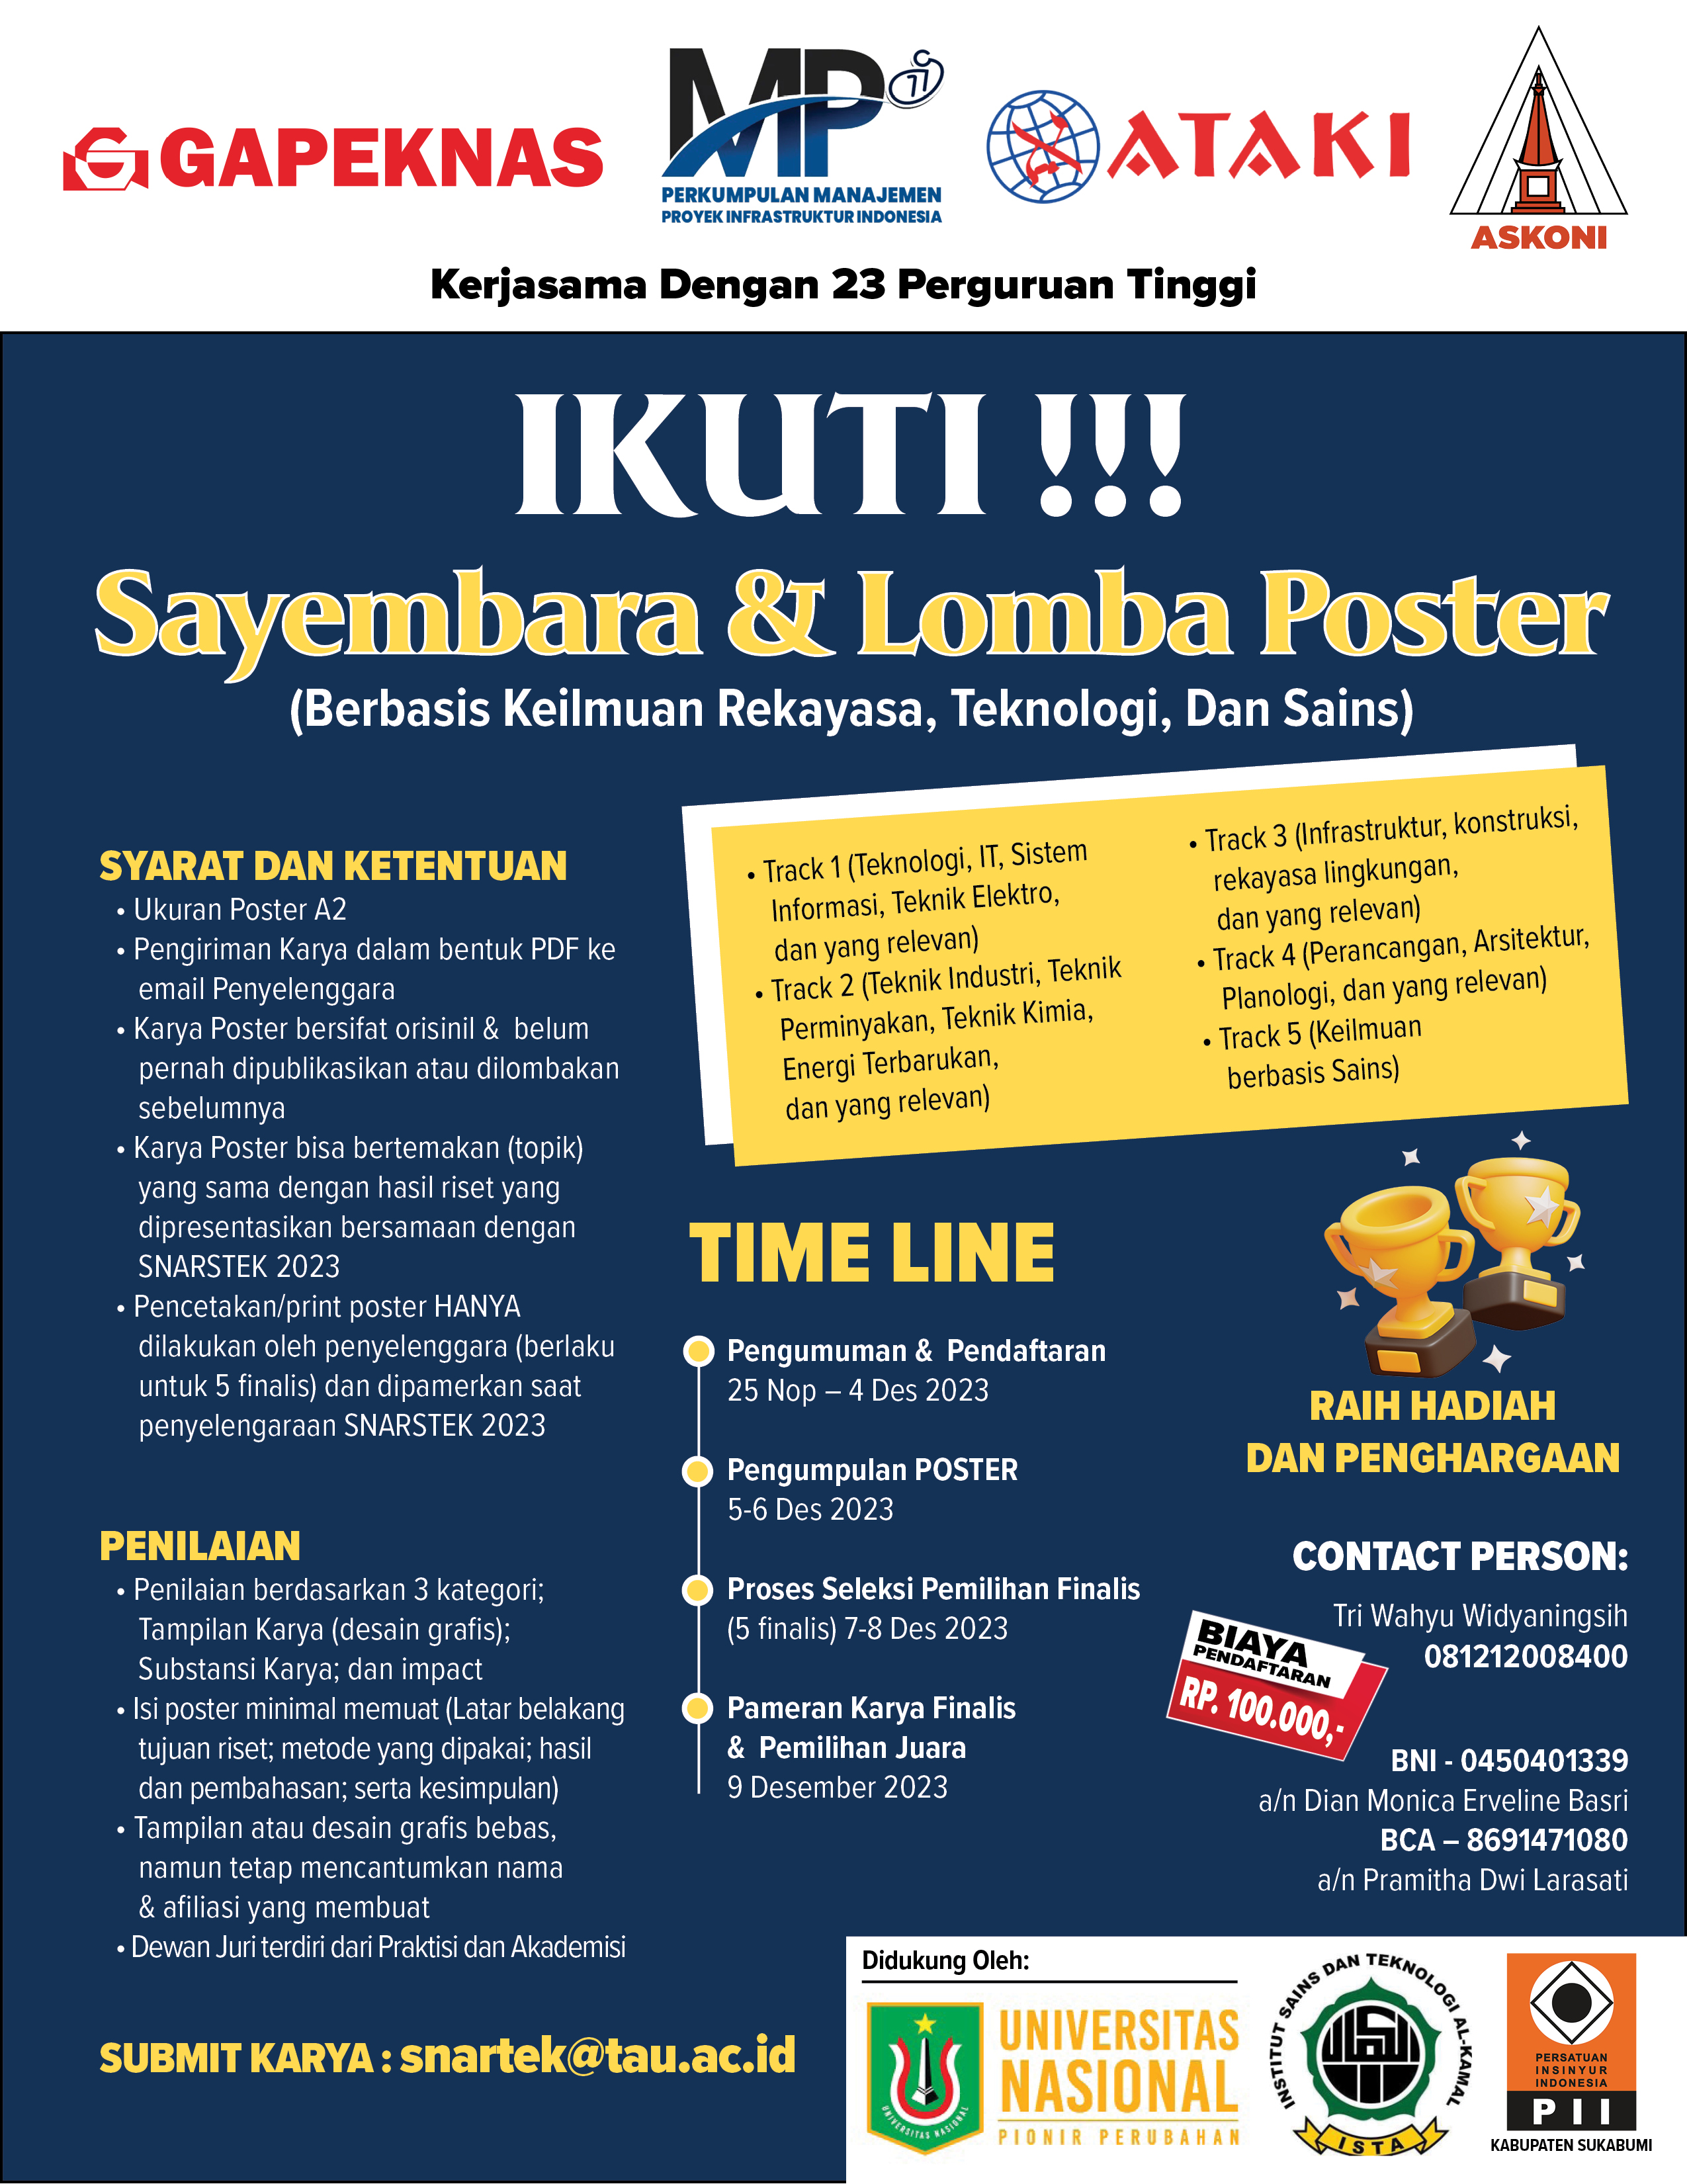 Sayembara & Lomba Poster